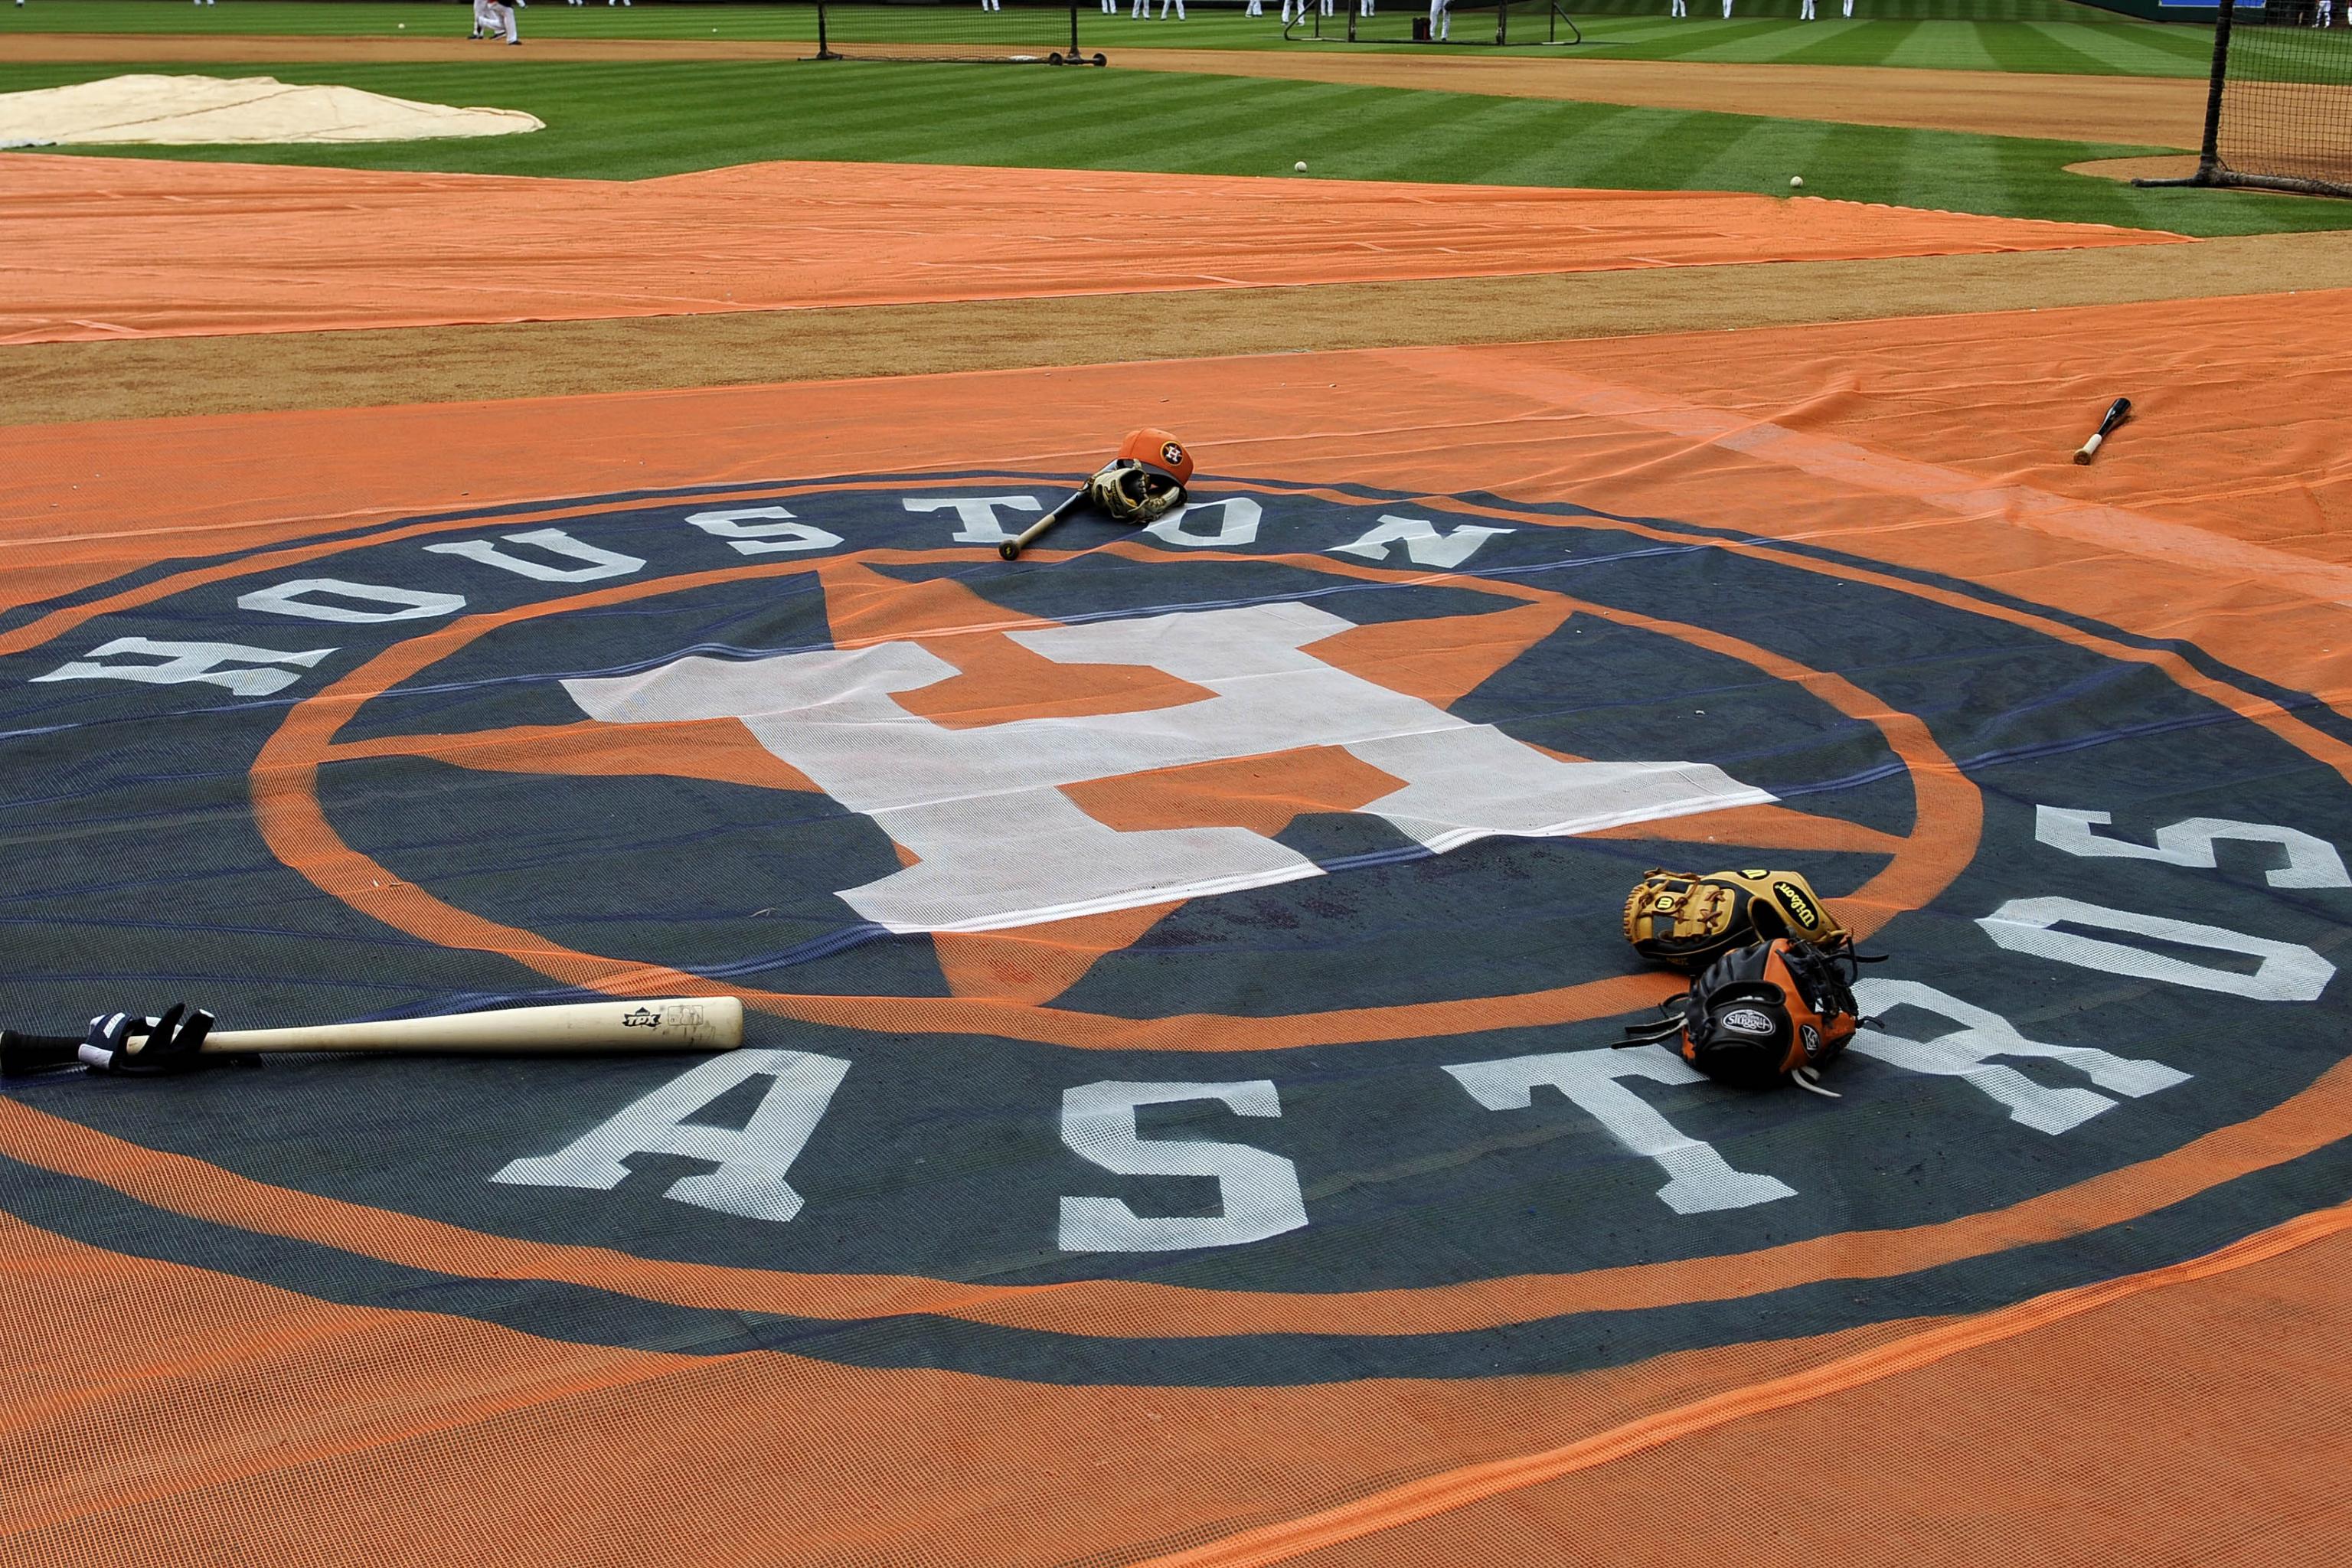 A minor league team's creative idea to mock the cheating Astros